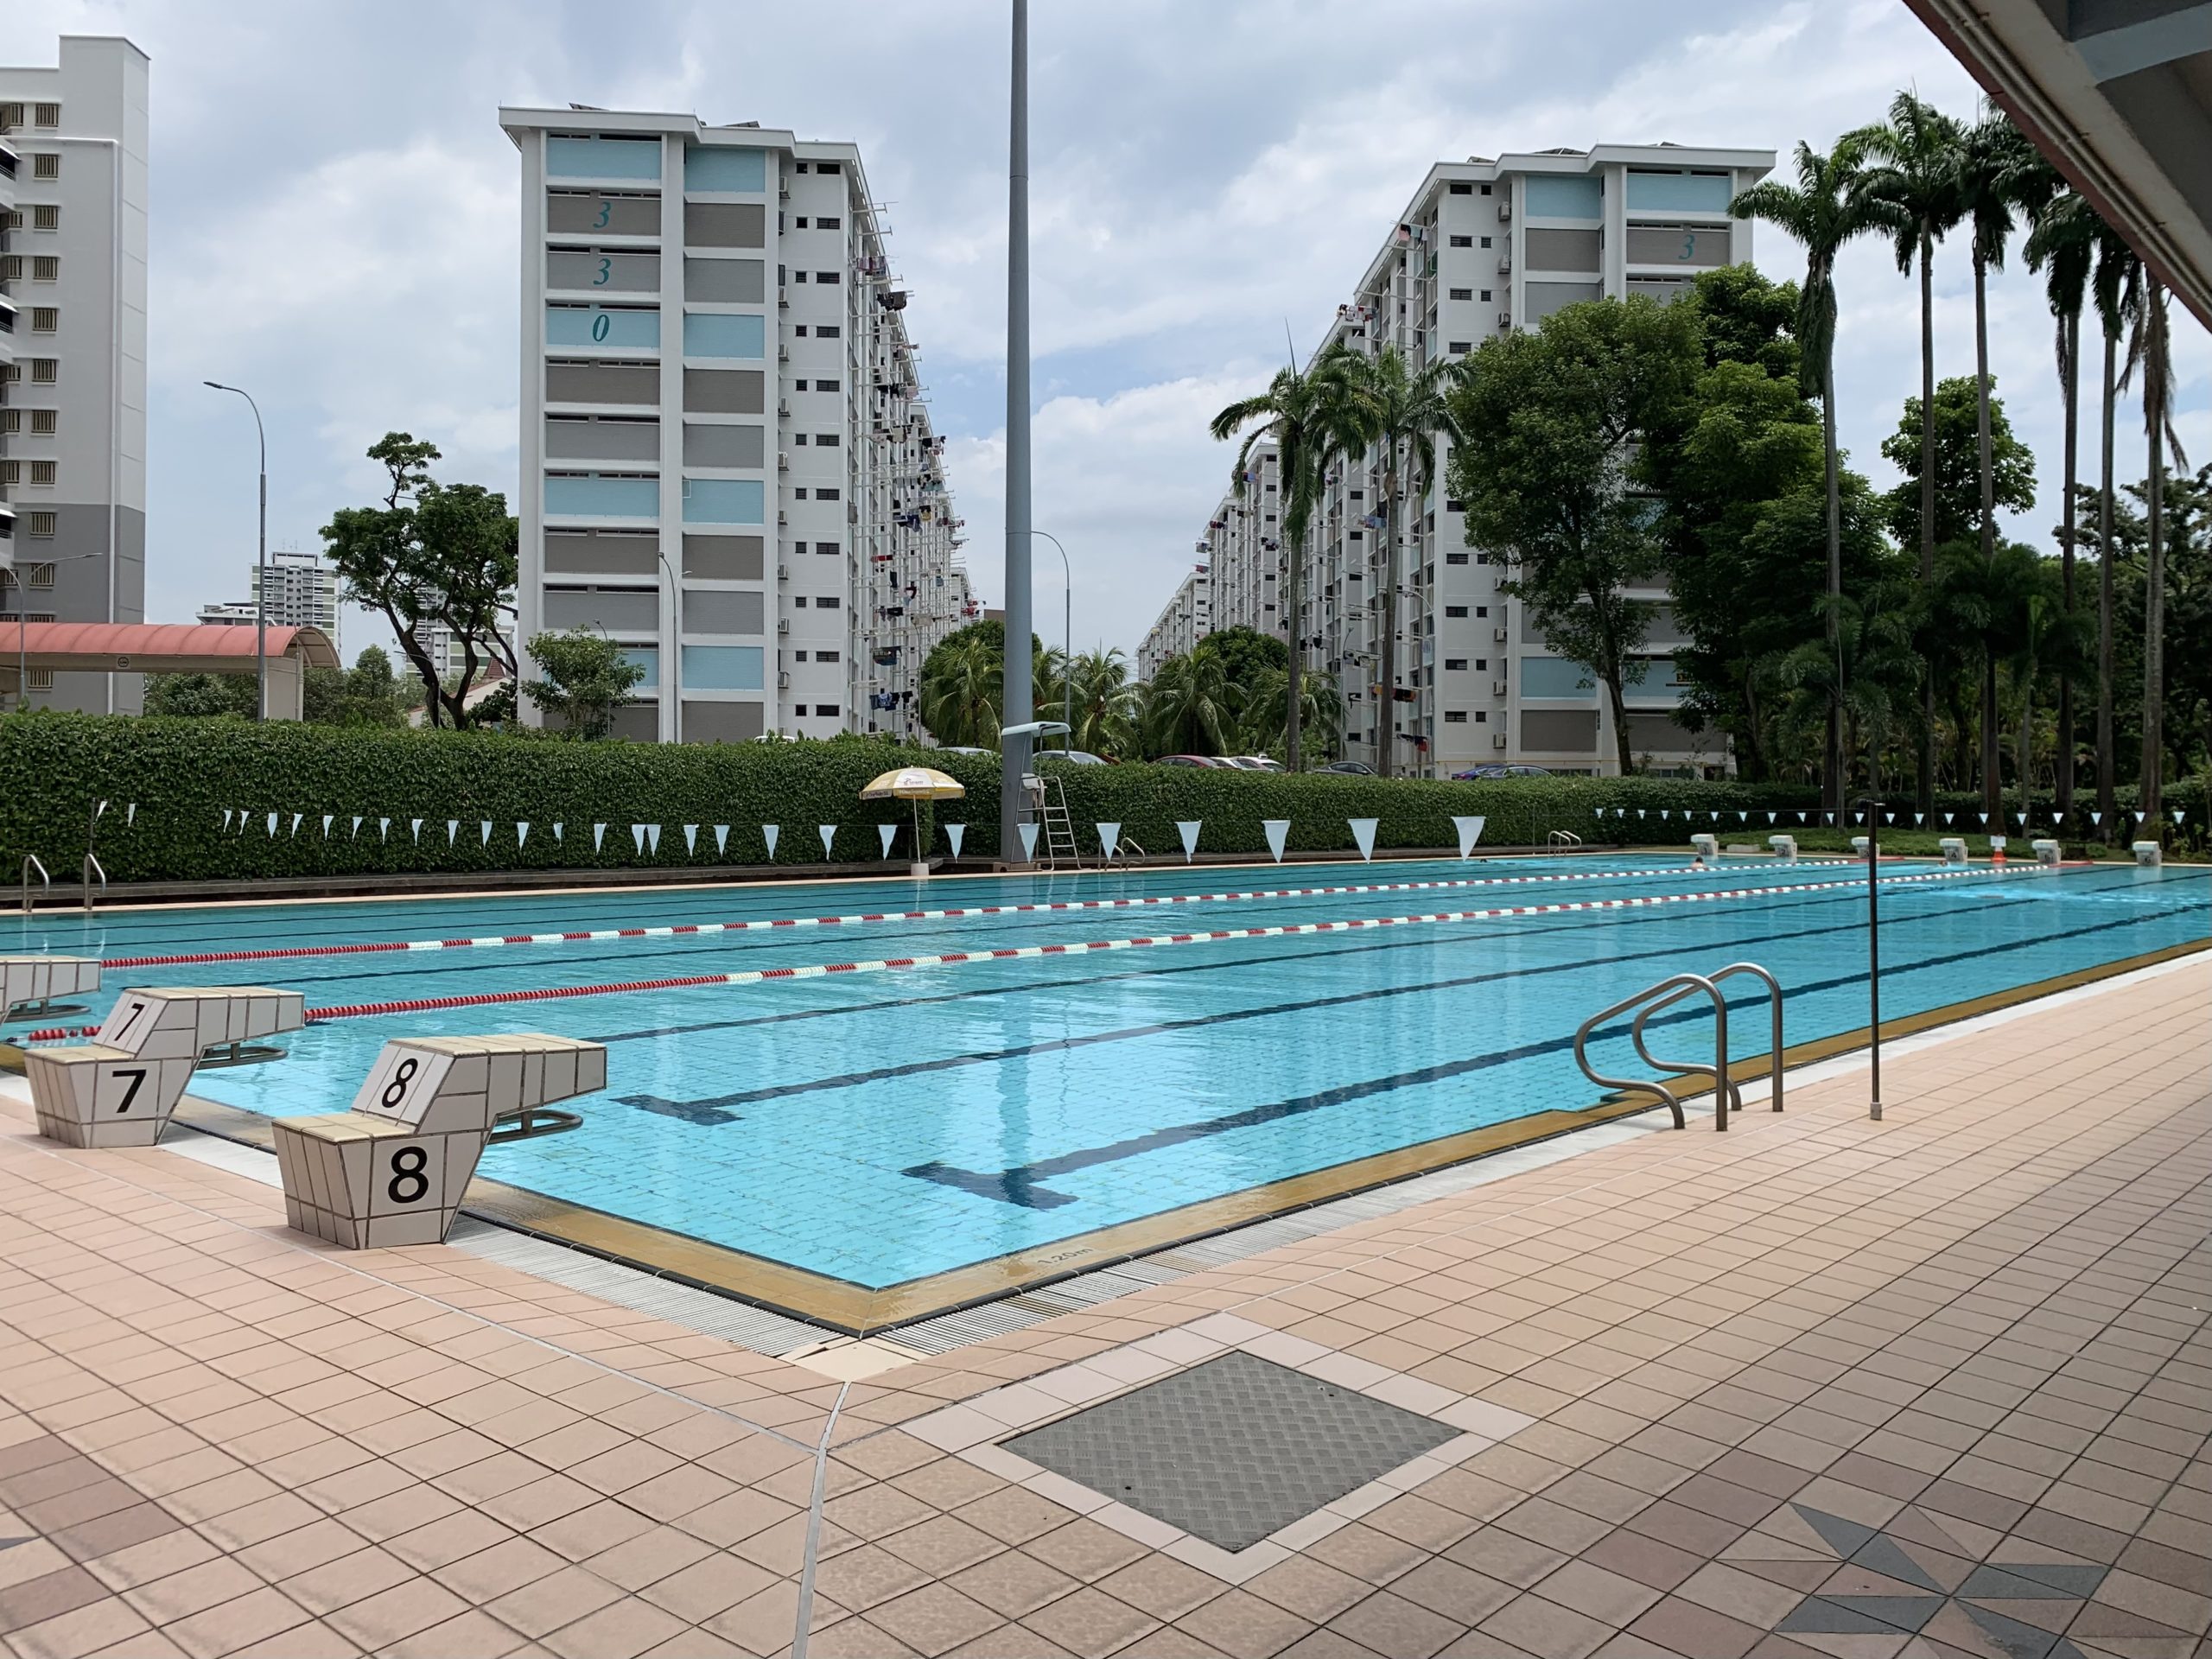 Ang Mo Kio Swimming Complex